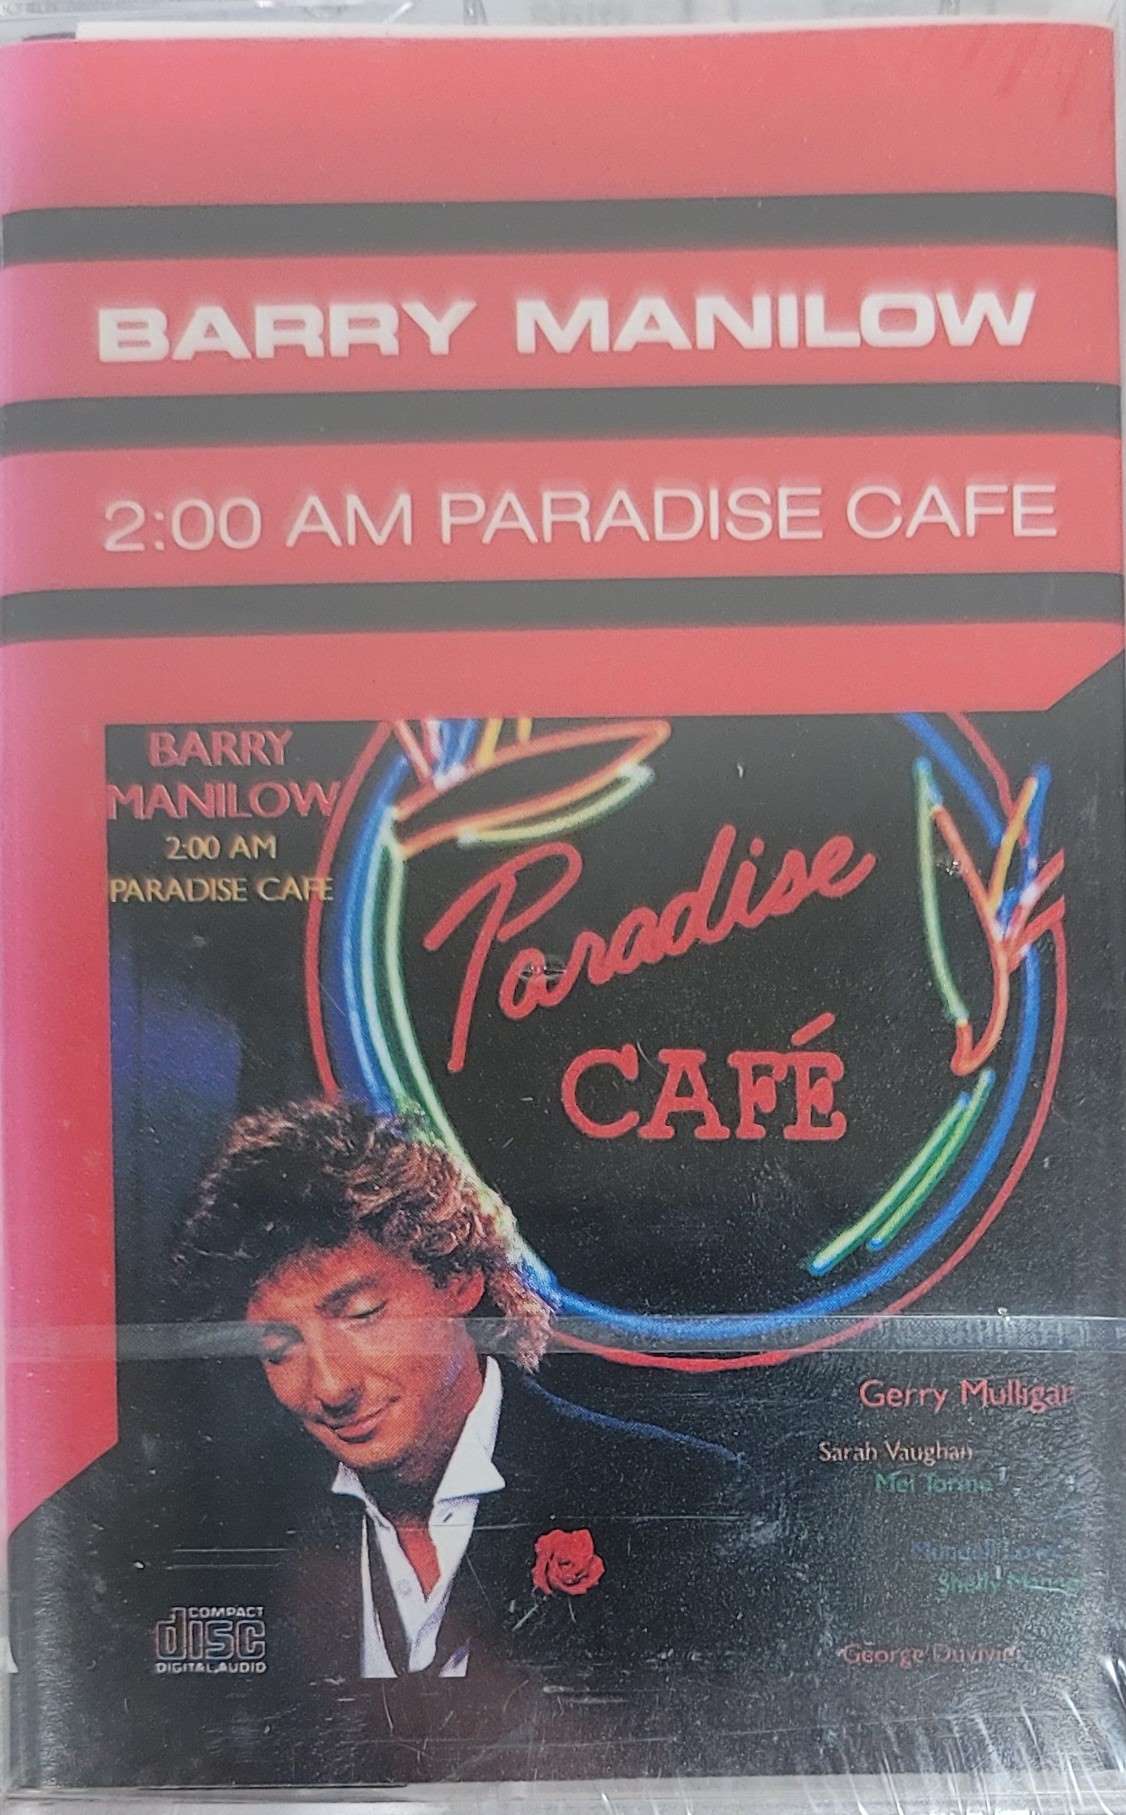 BARRY MANILOW - 2:00 AM PARADISE CAFE [CASSETTE TAPE]